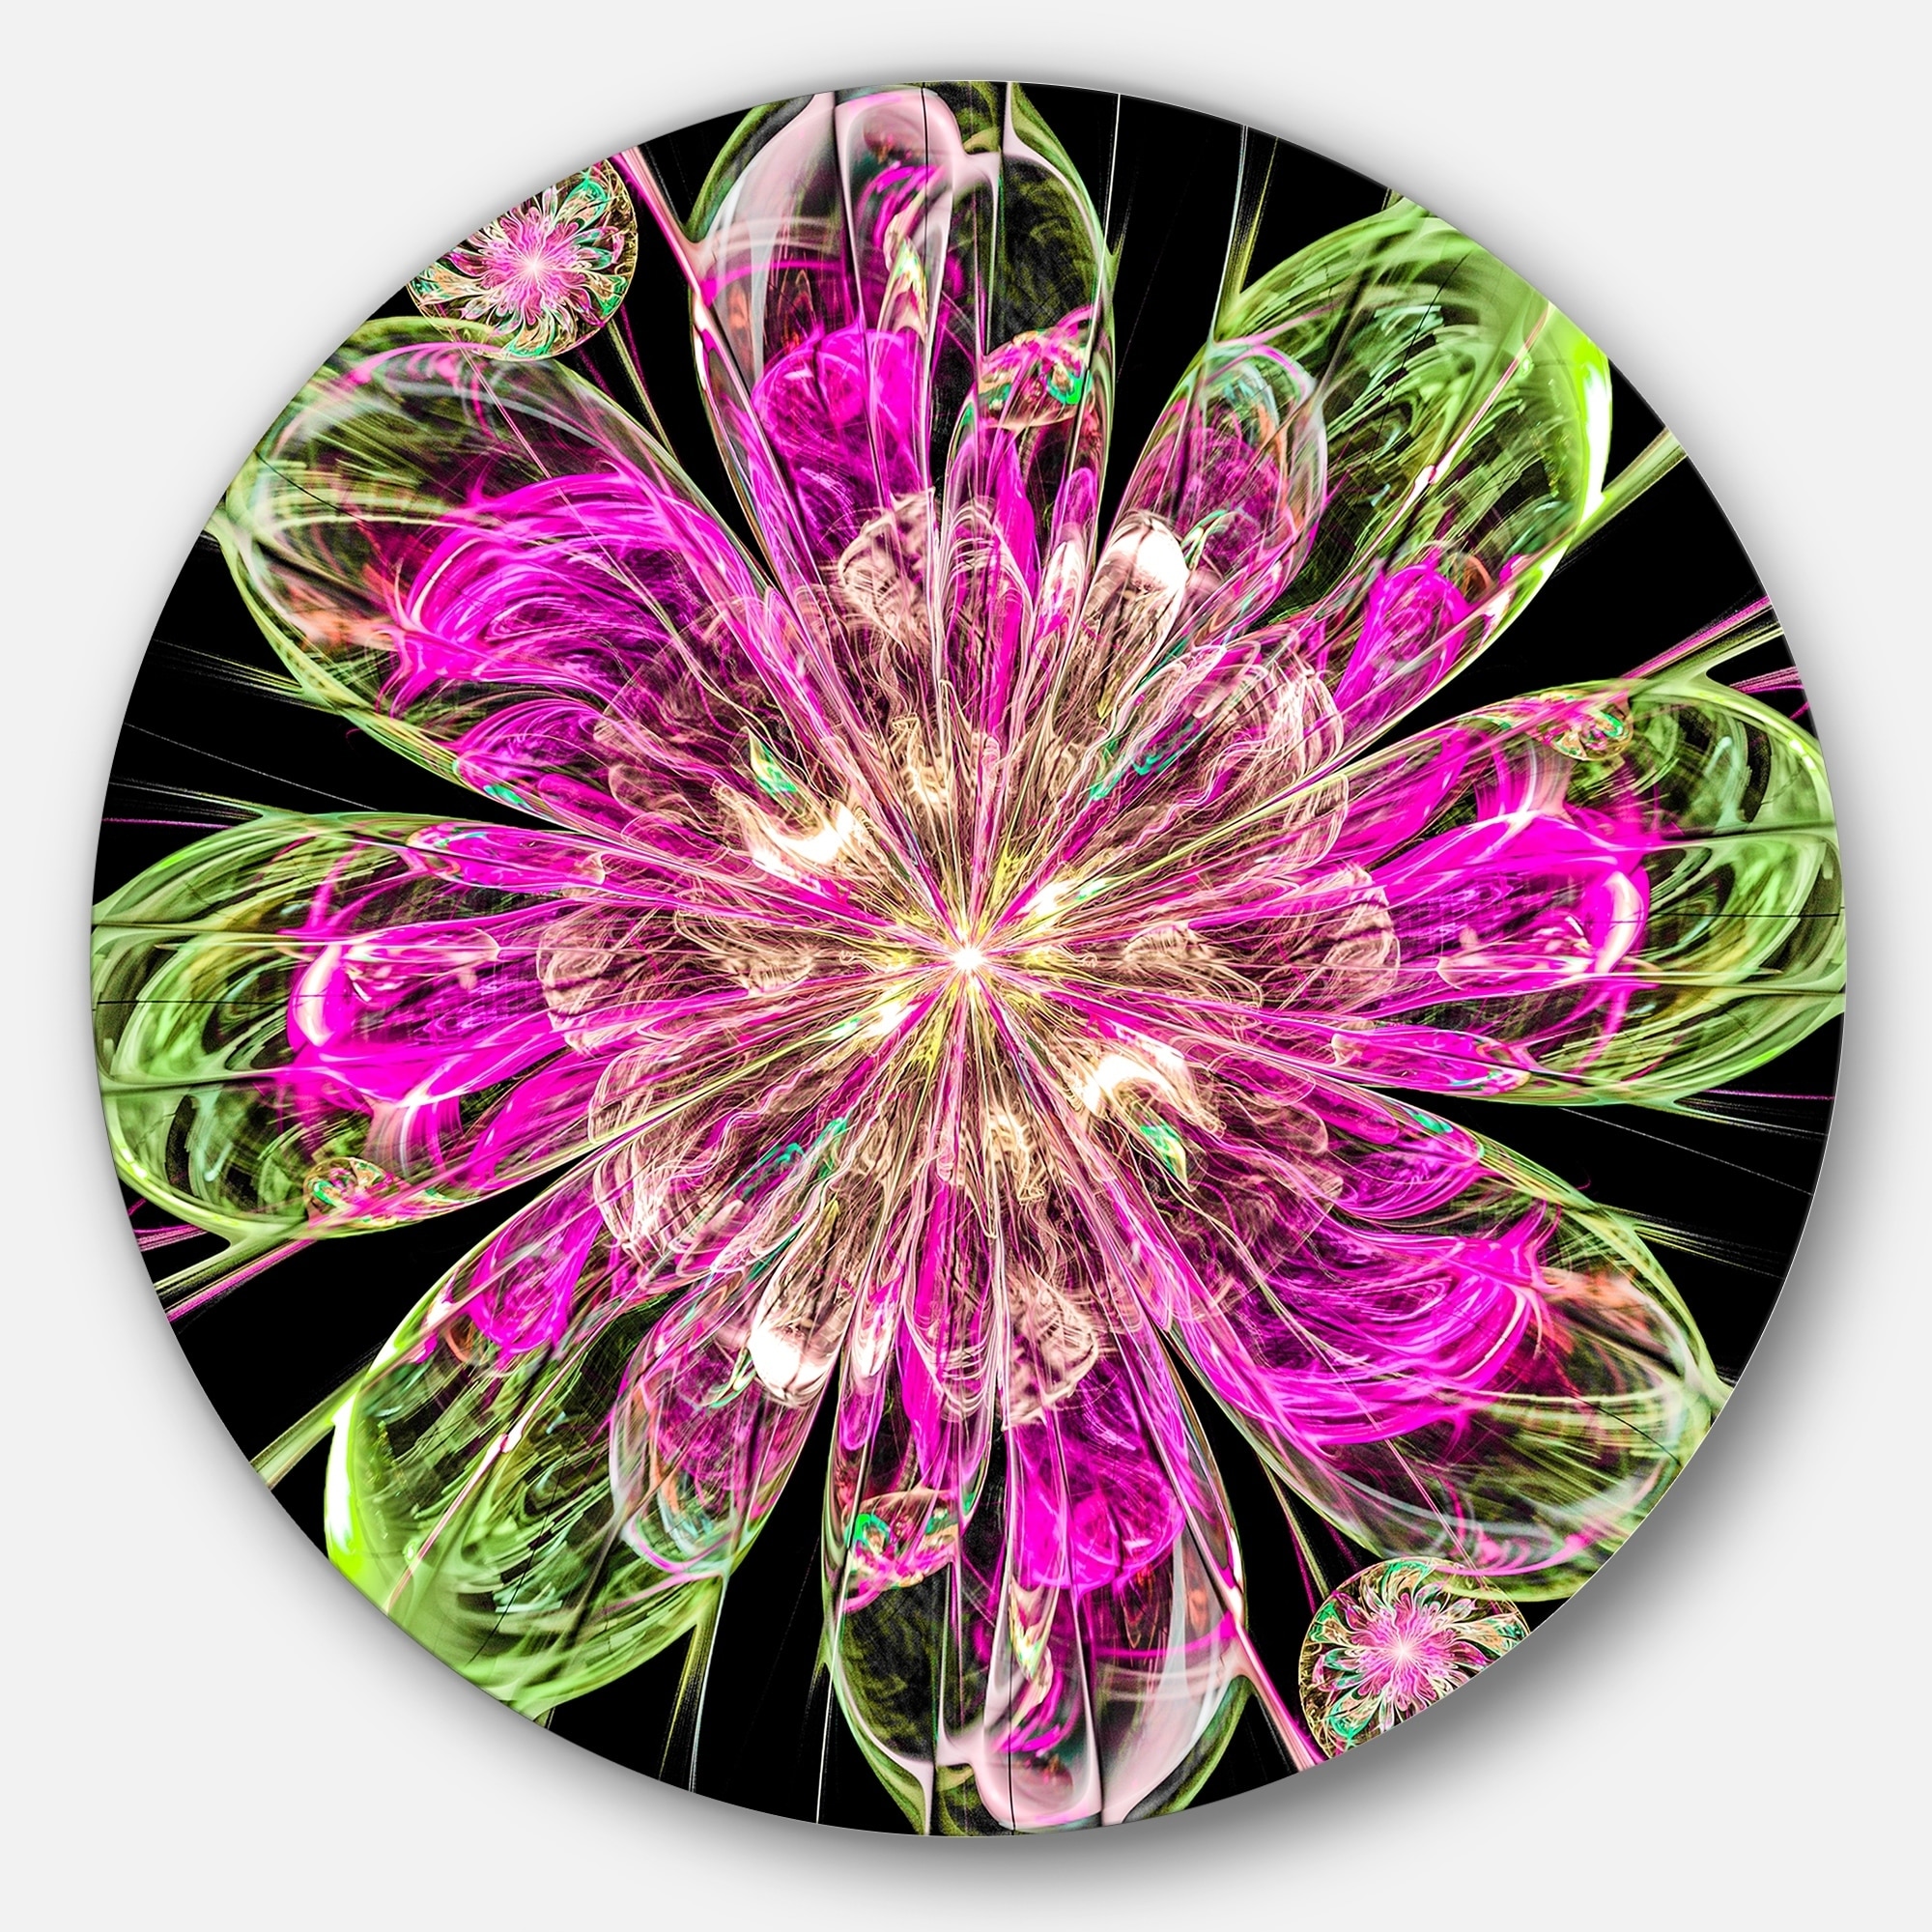 Designart 'Perfect Fractal Flower in Pink and Green' Floral Disc Metal Artwork